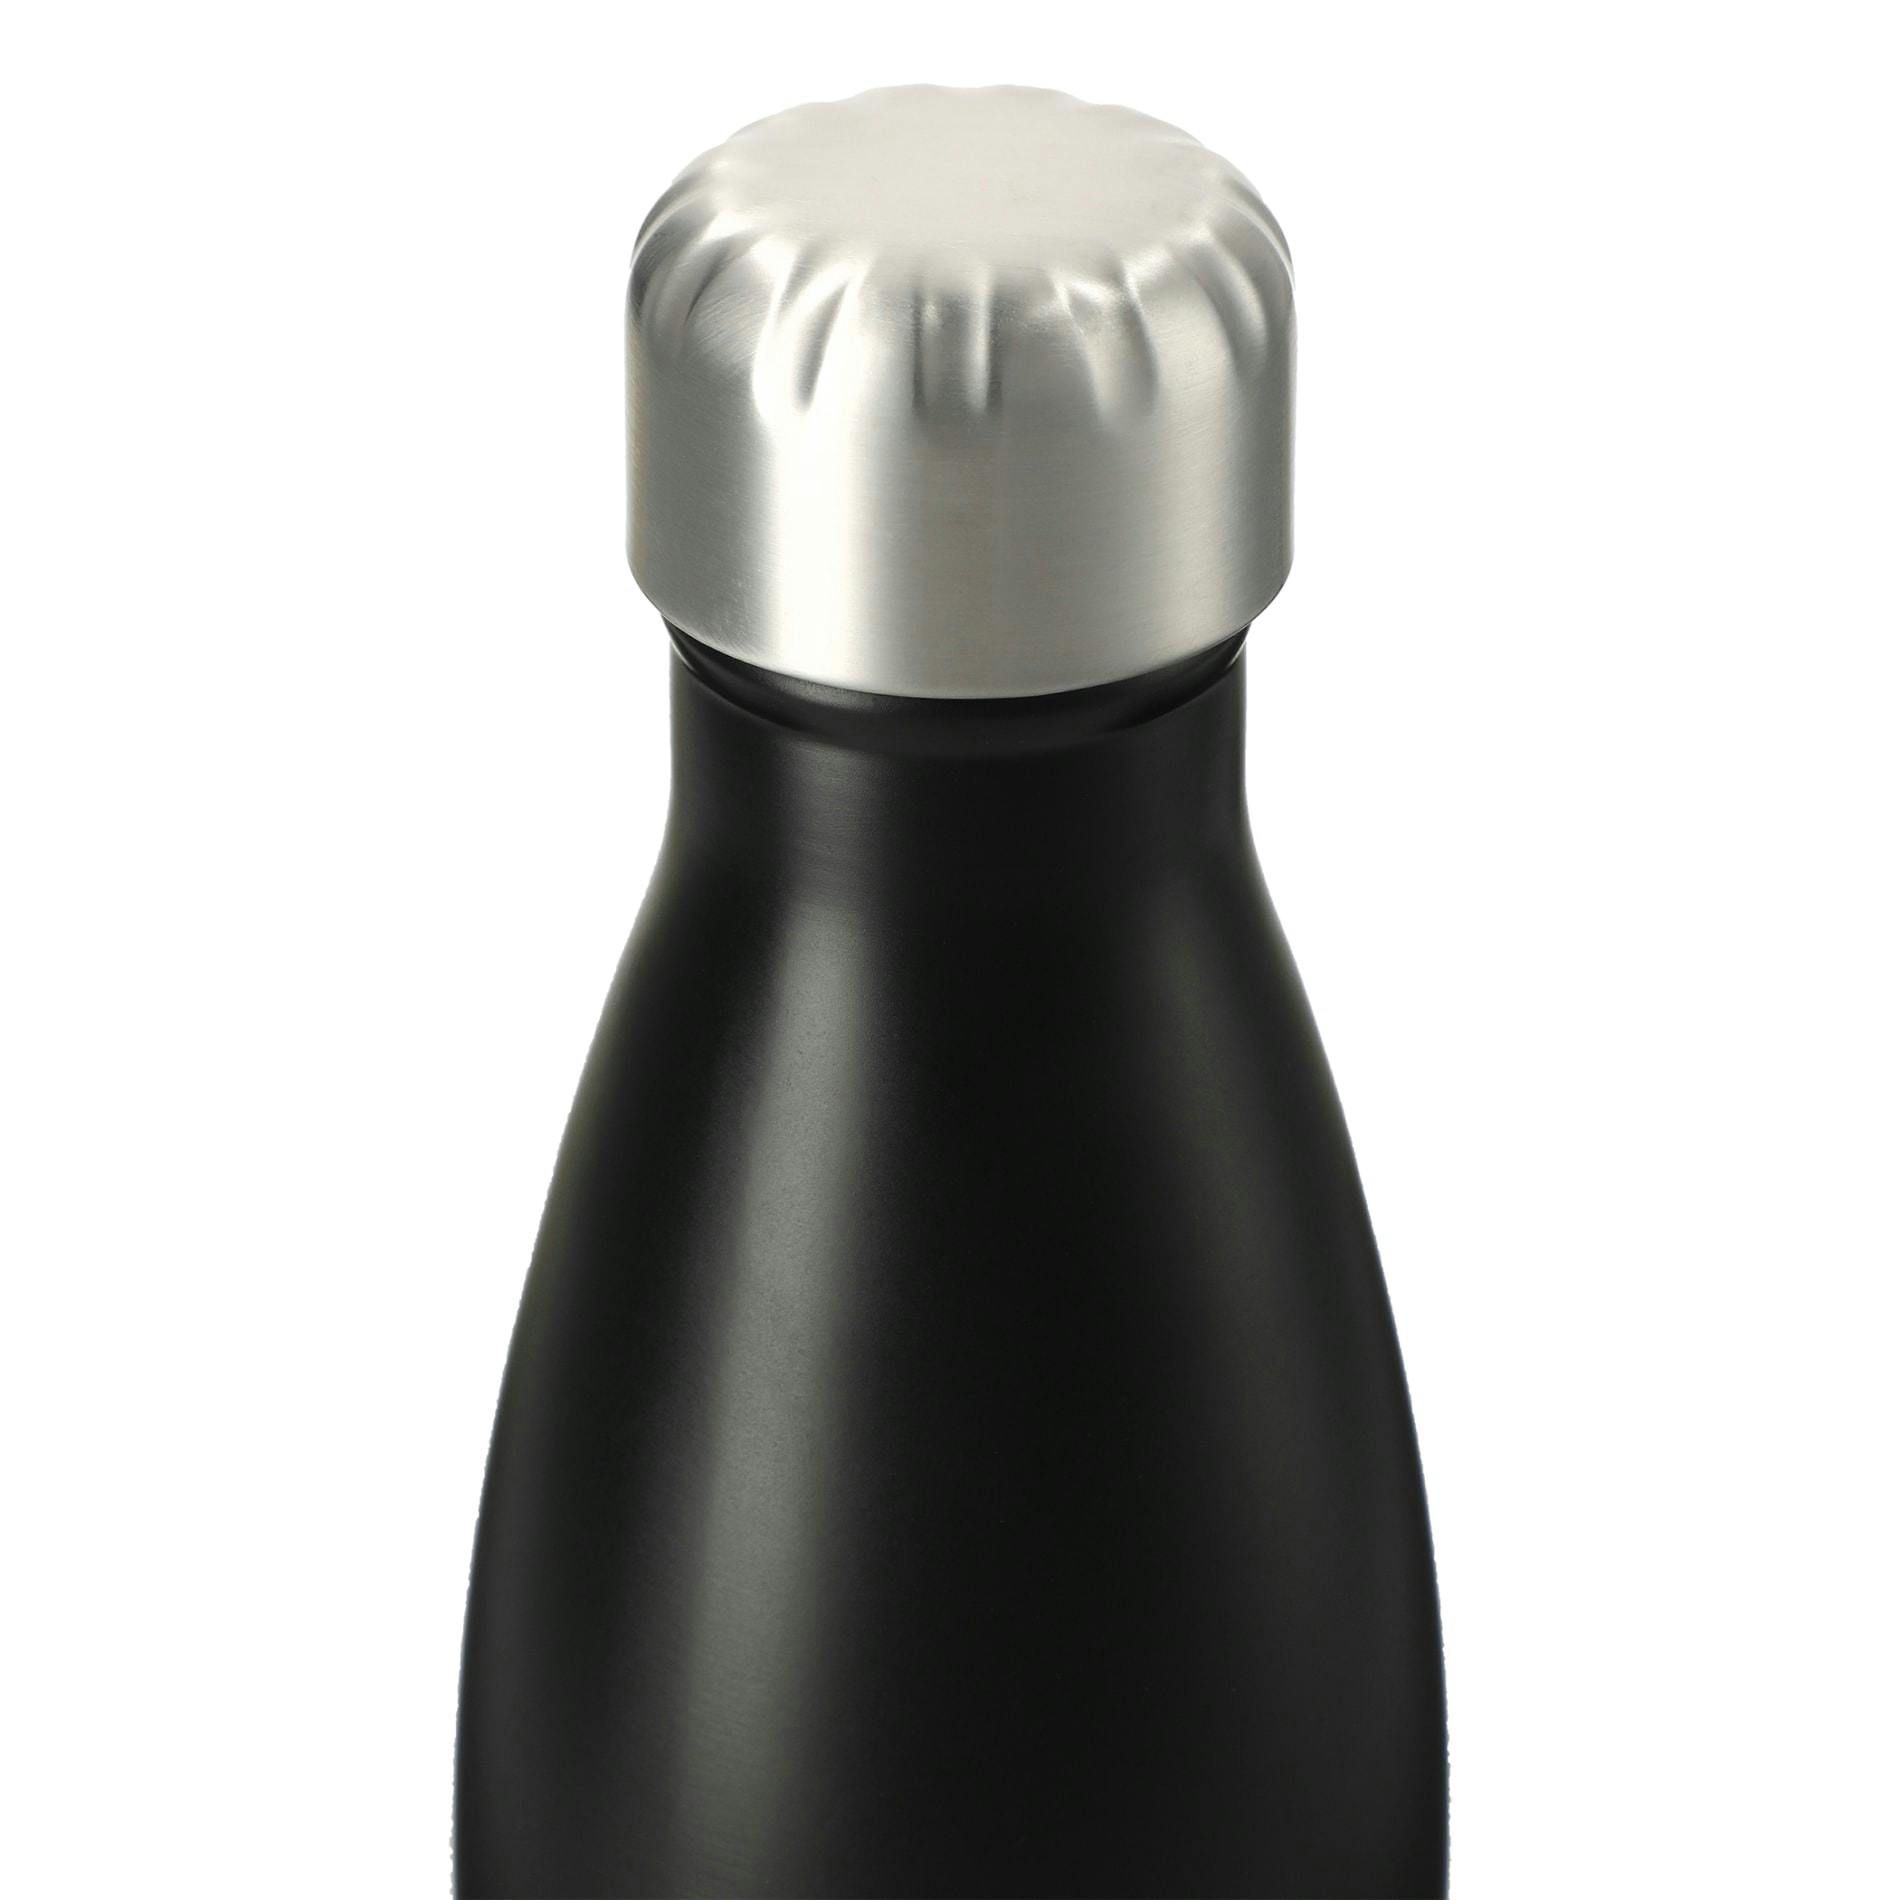 Arsenal 25oz Stainless Sports Bottle - additional Image 1